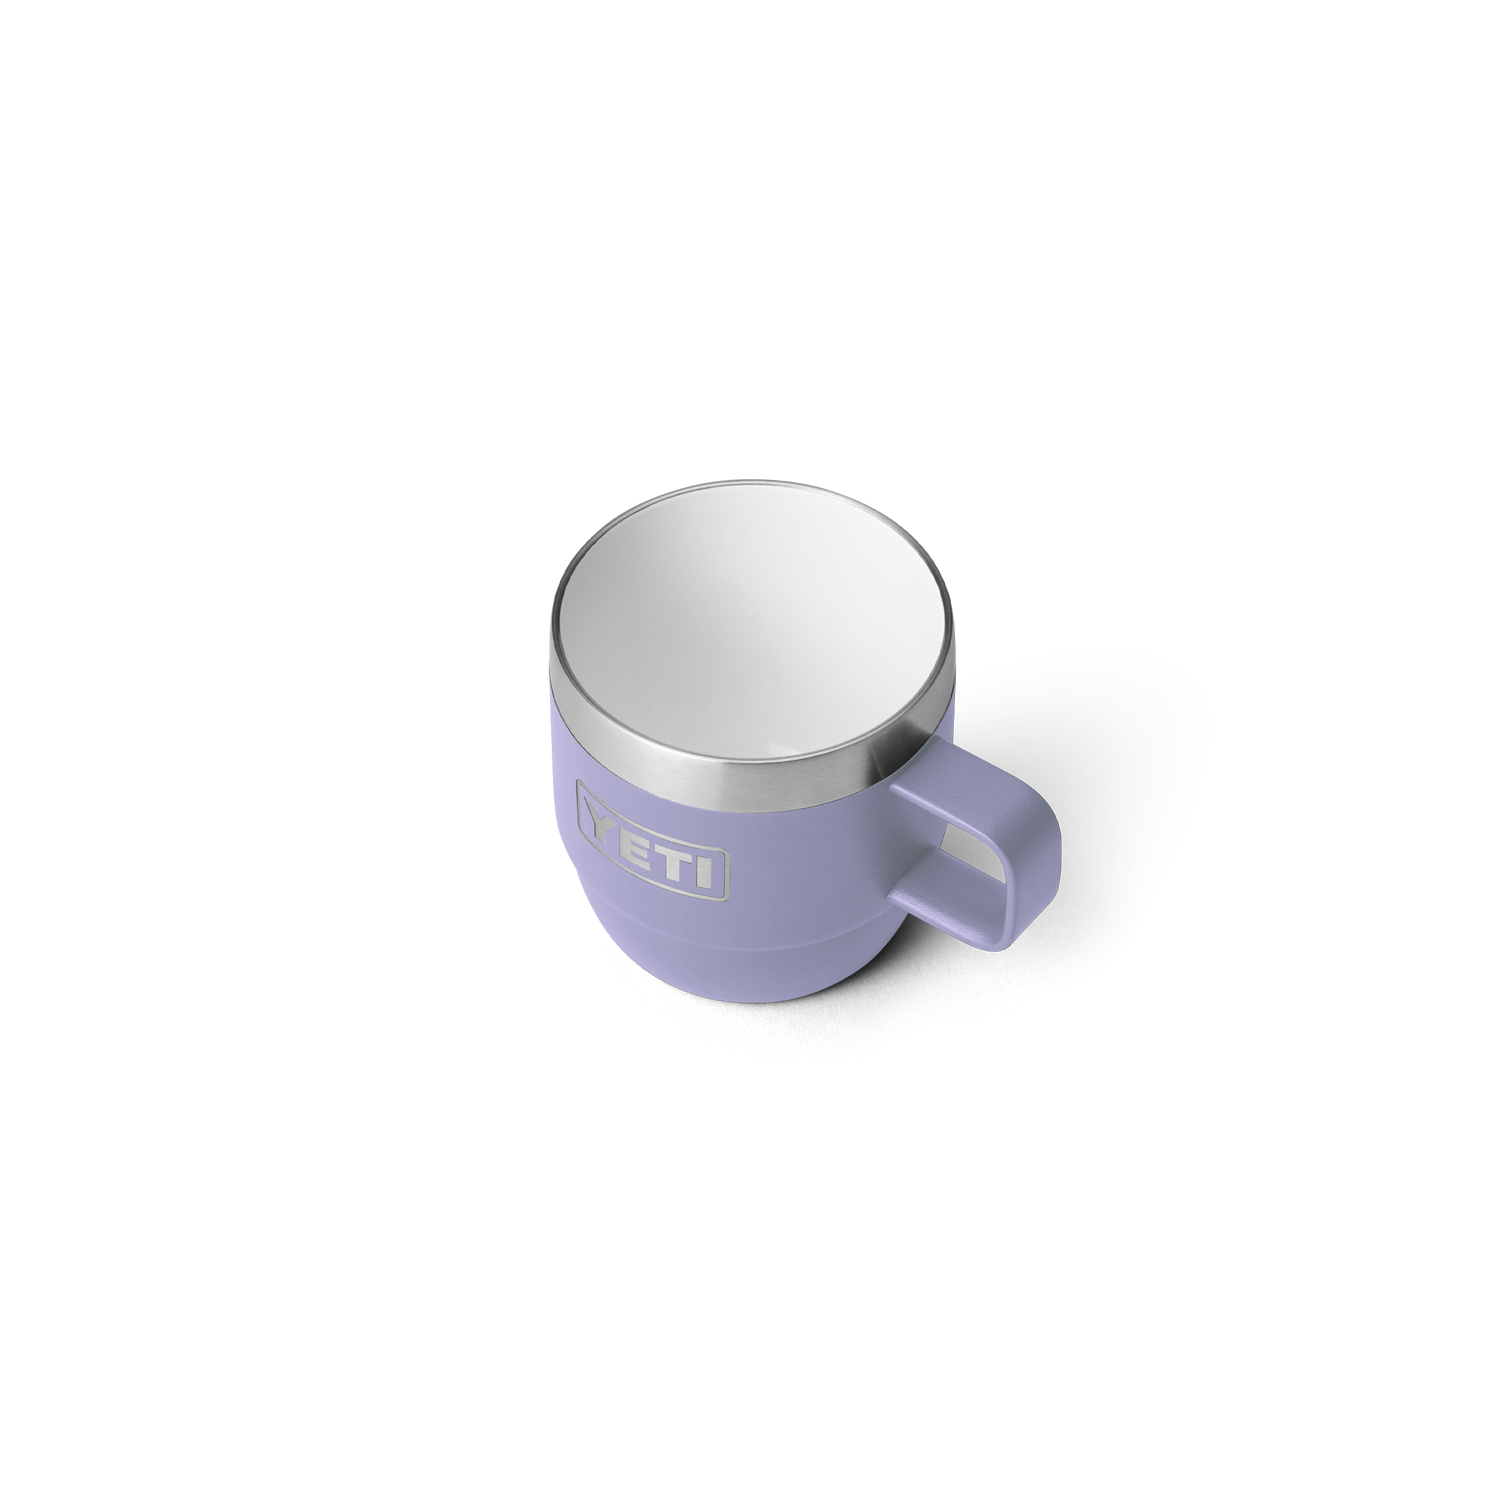 Yeti Rambler 14oz Stackable Mug with Magslider Lid - Cosmic Lilac